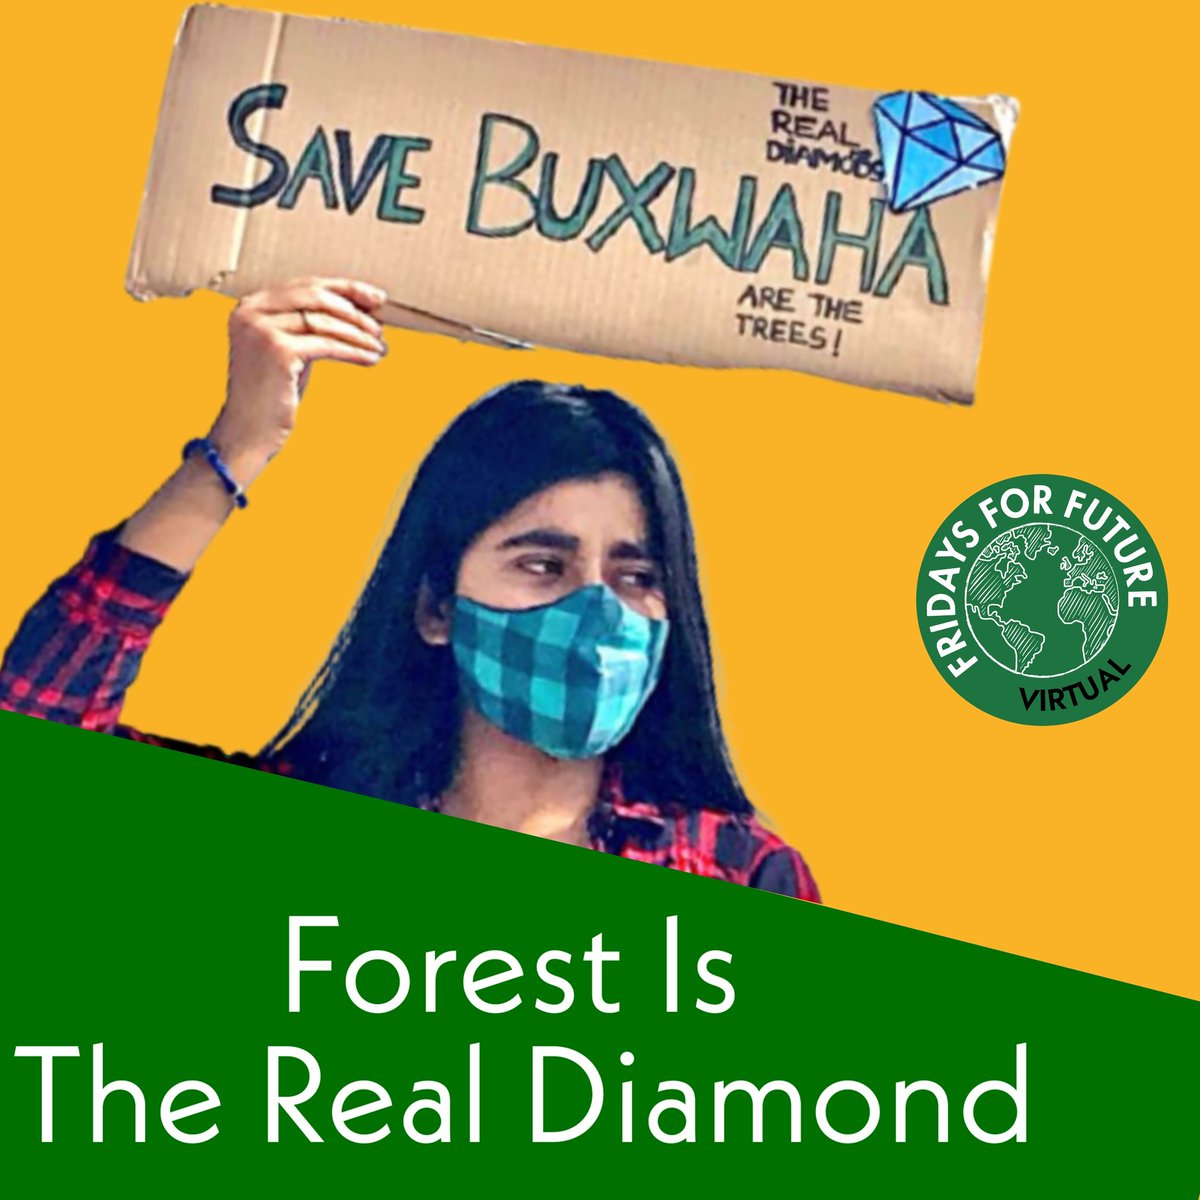 पेड़ लगाओ जीवन बचाओ .
#WorldEnvironmentDay #savebuxwahaforest